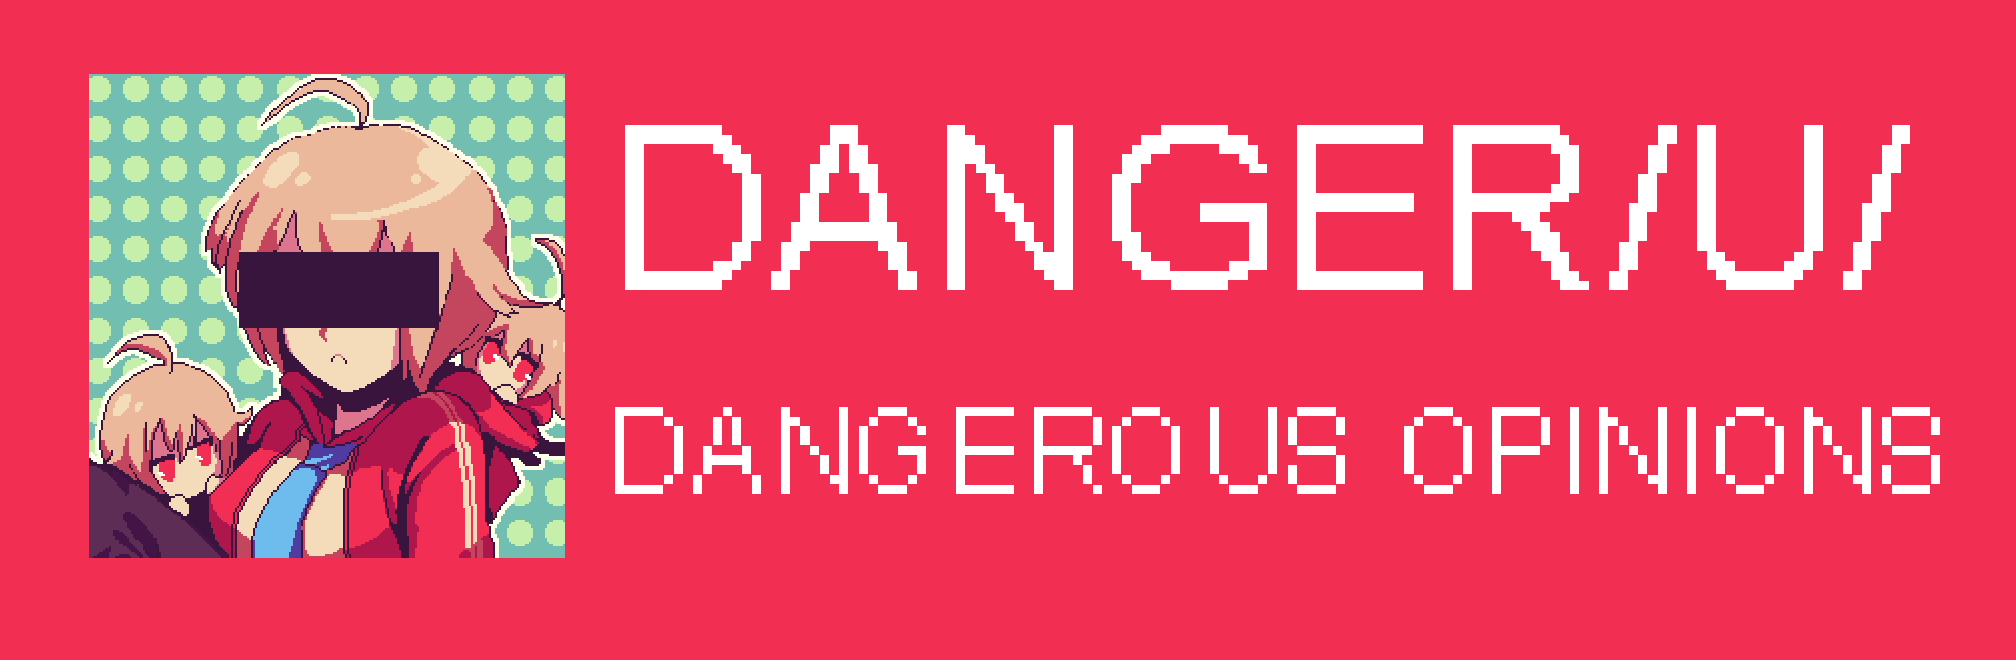 danger/u/